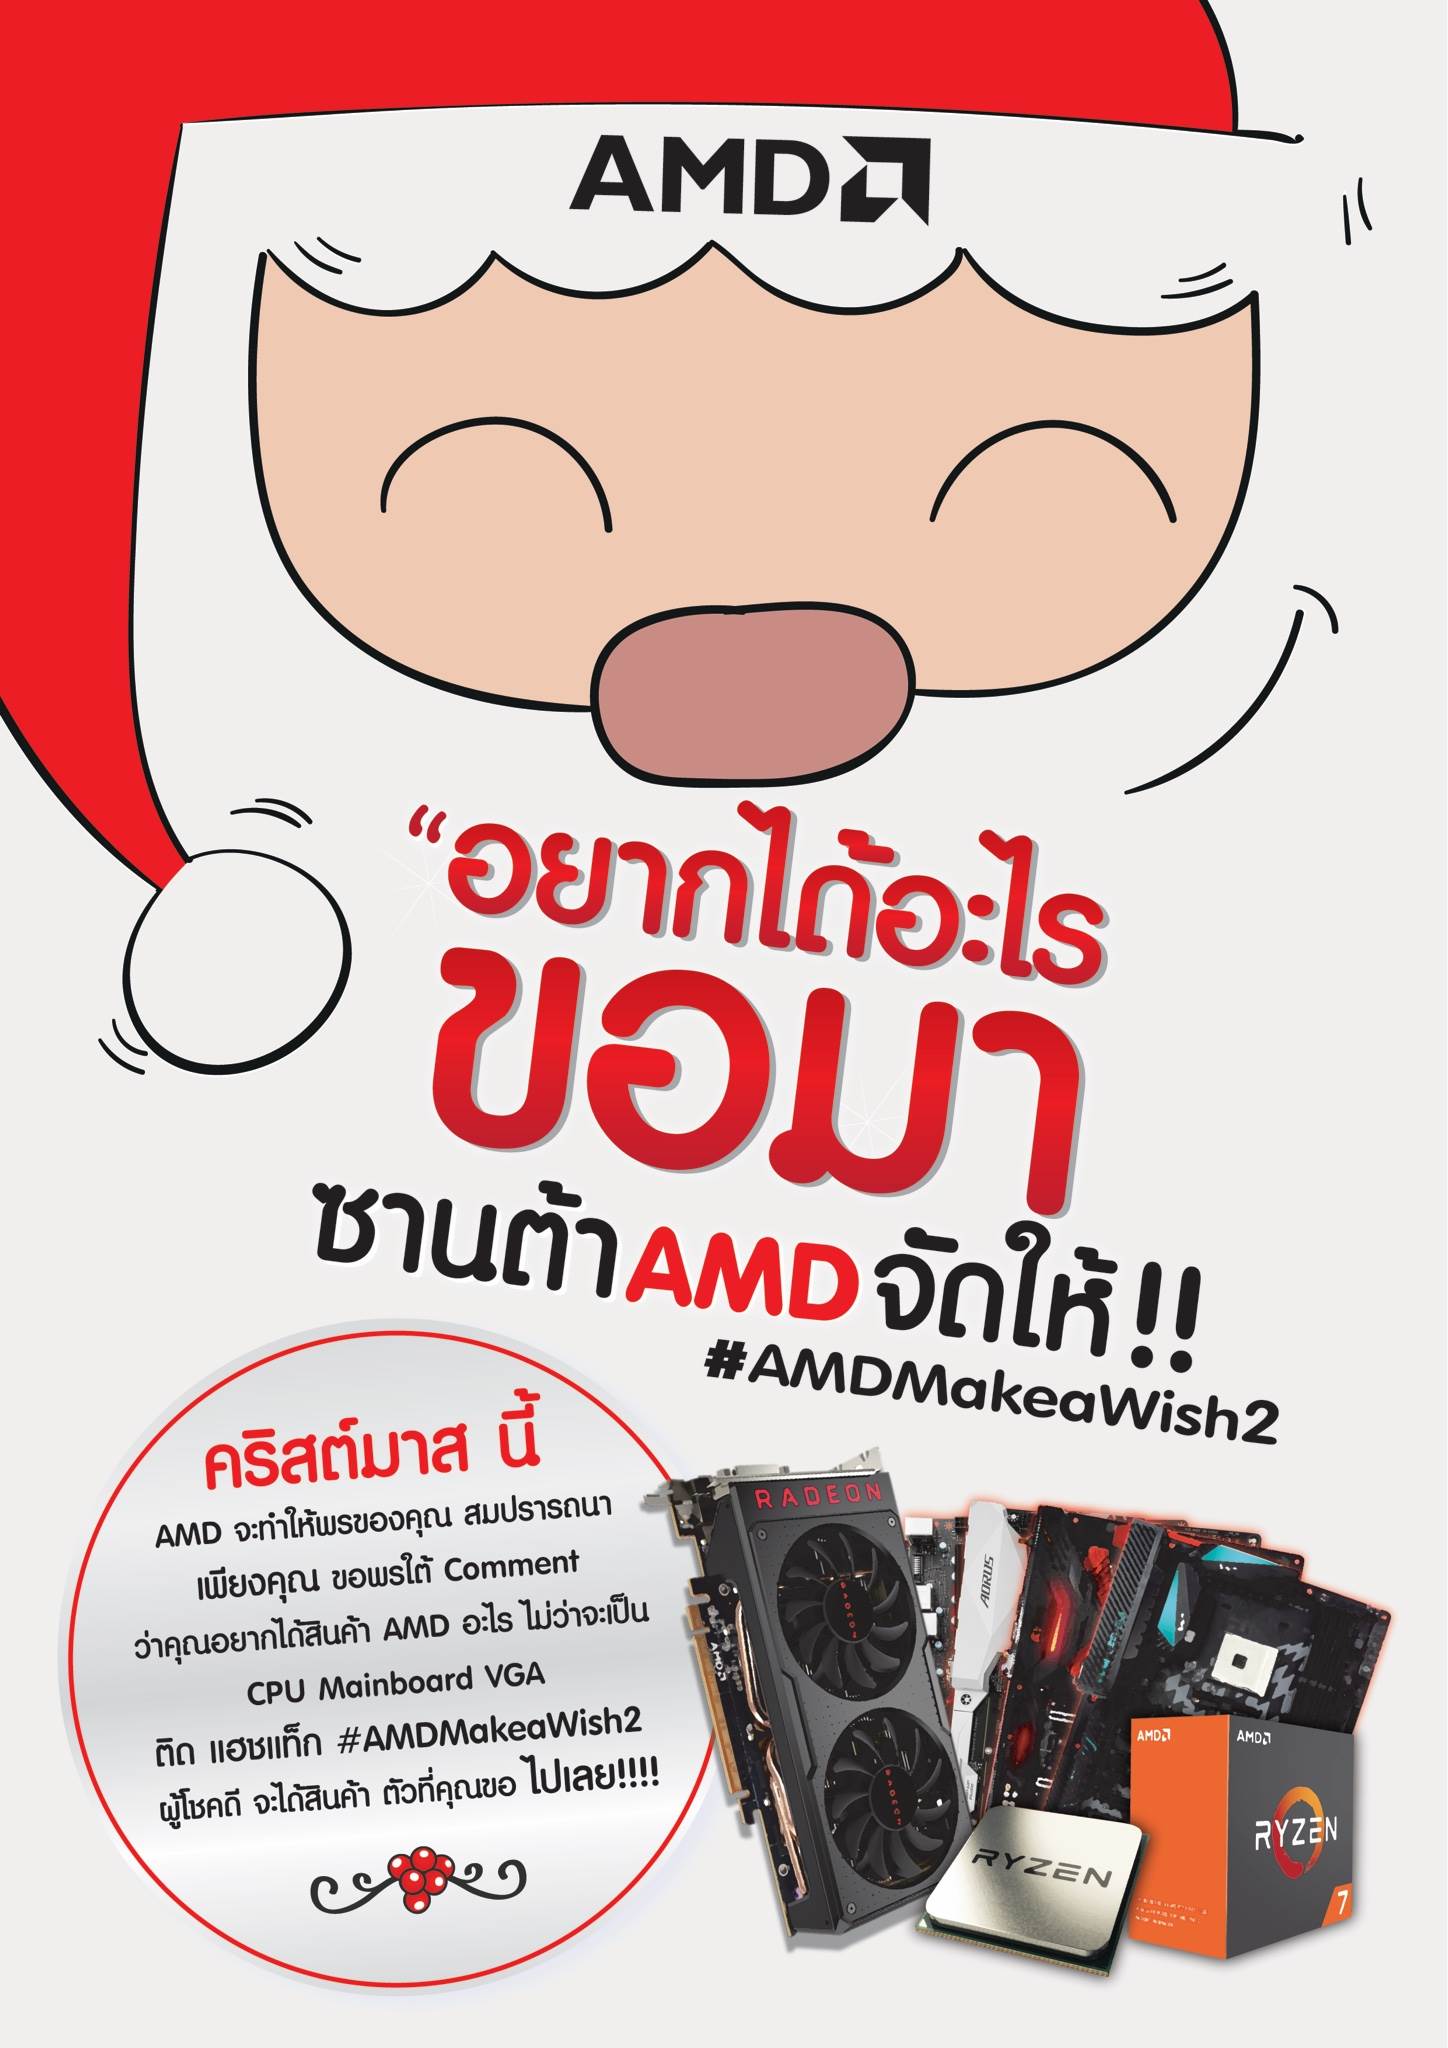 AMD Make a wish ครั้งที่ 2 อยากได้อะไรขอมา ซานต้า AMD จัดให้!! วันนี้ ถึง 25 ธันวาคมนี้ เท่านั้น